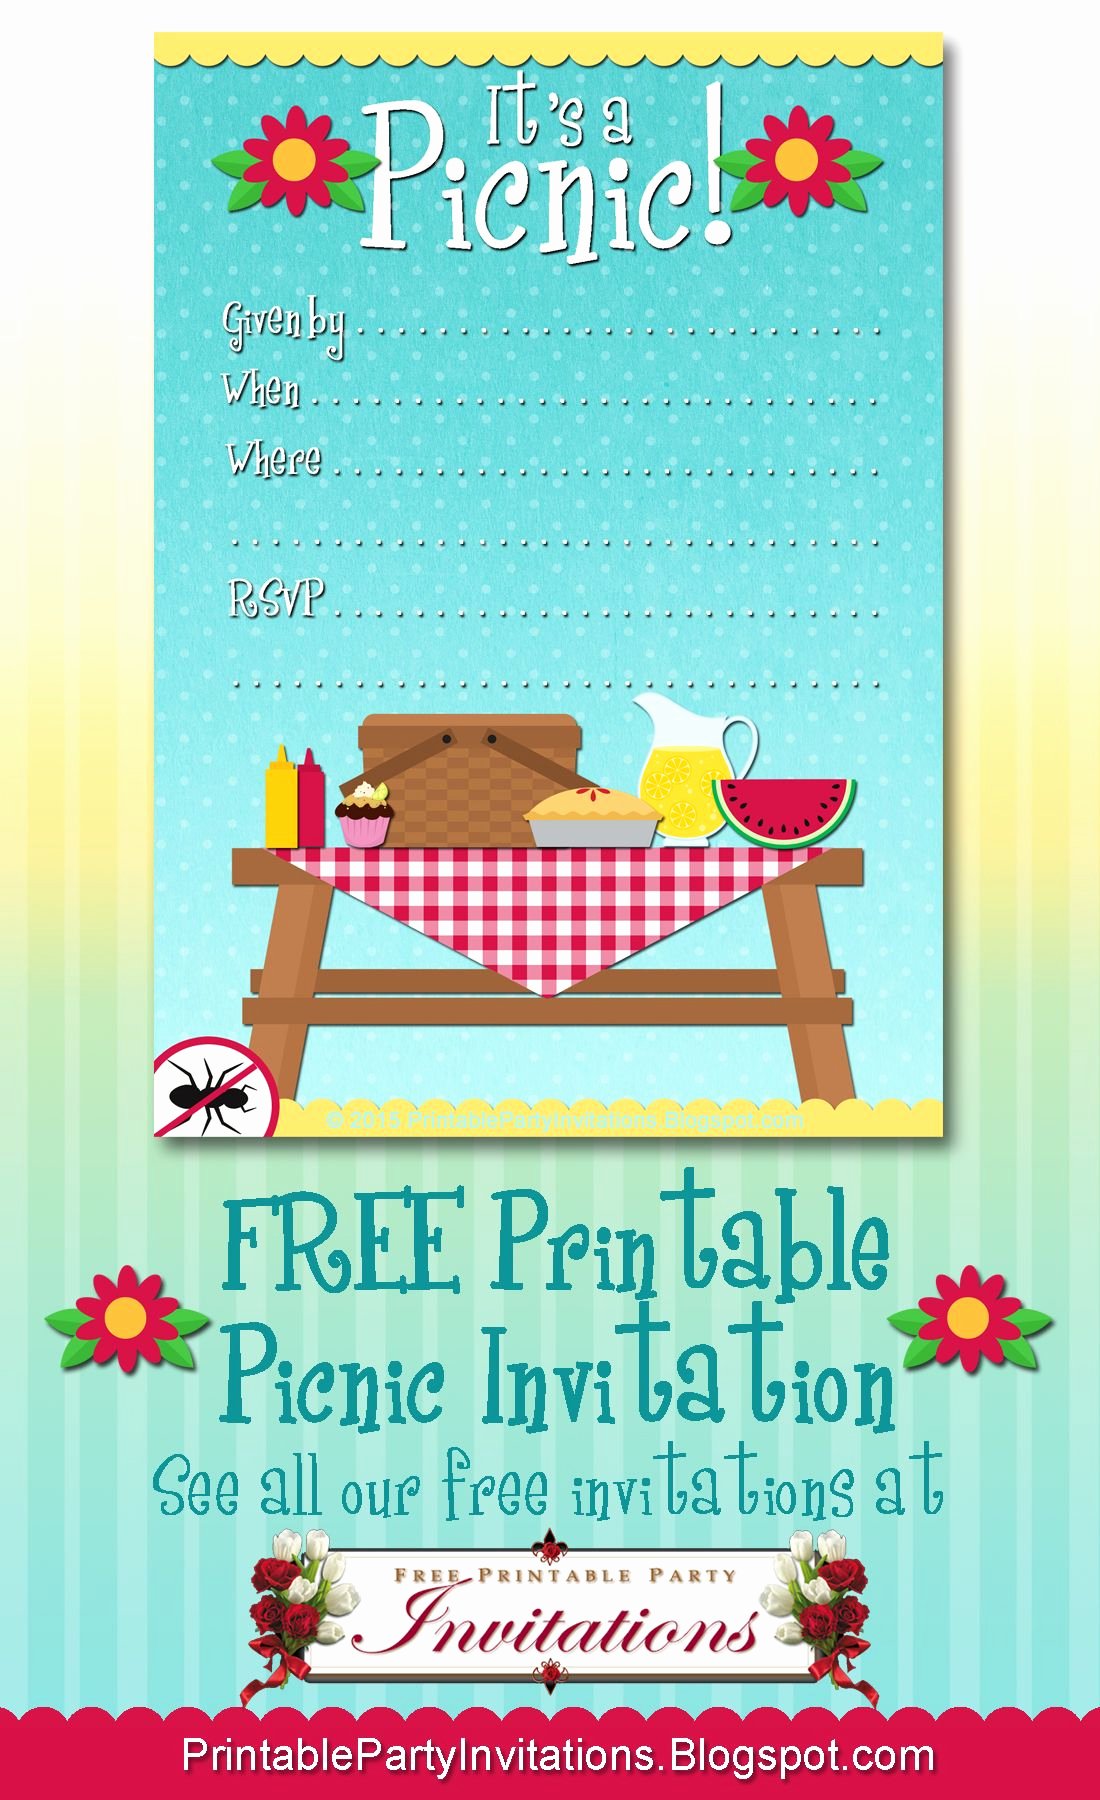 Free Picnic Invitation Template Awesome Free Printable Picnic Invitation